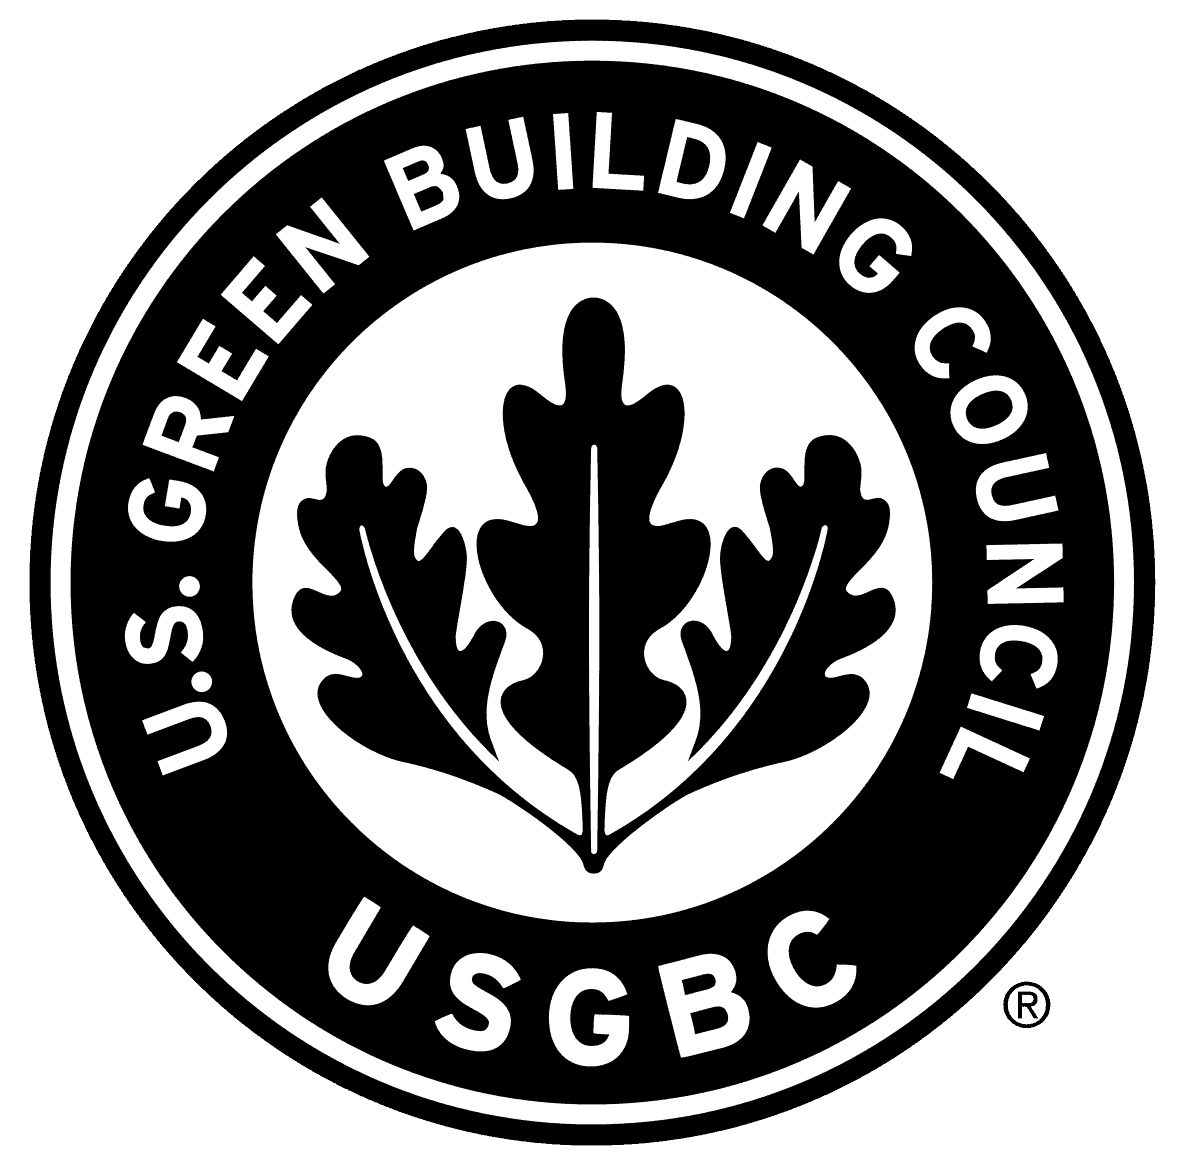 U.S. Green Building Council logo.svg